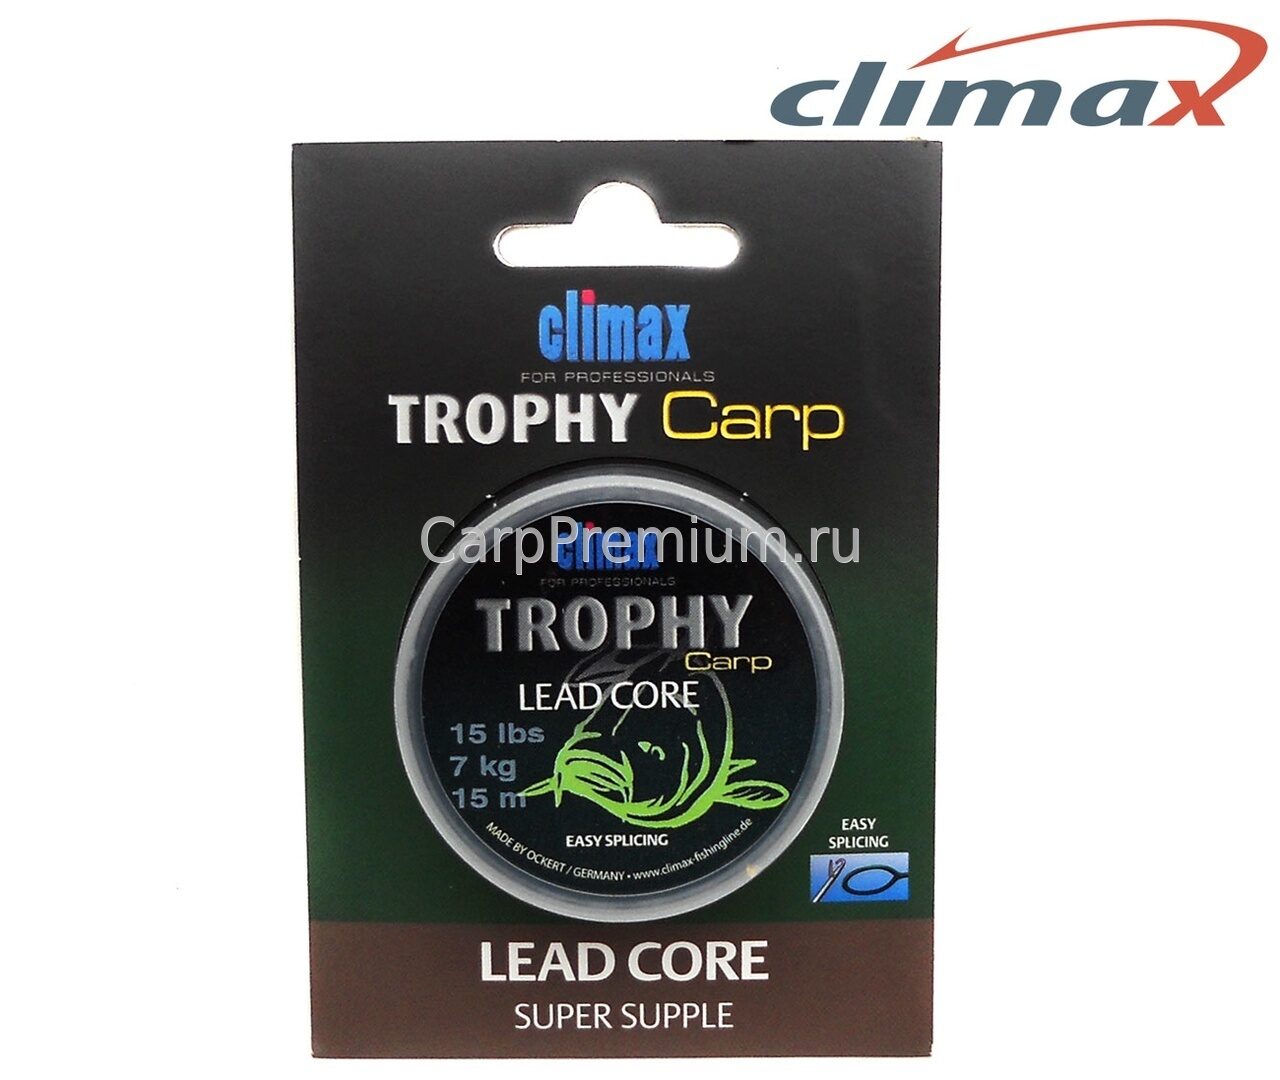 Лидкор со свинцовым стержнем Серый Сlimax (Клаймакс) - Trophy Leadcore-Super Supple Silt 7 кг / 15 lb, 15 м